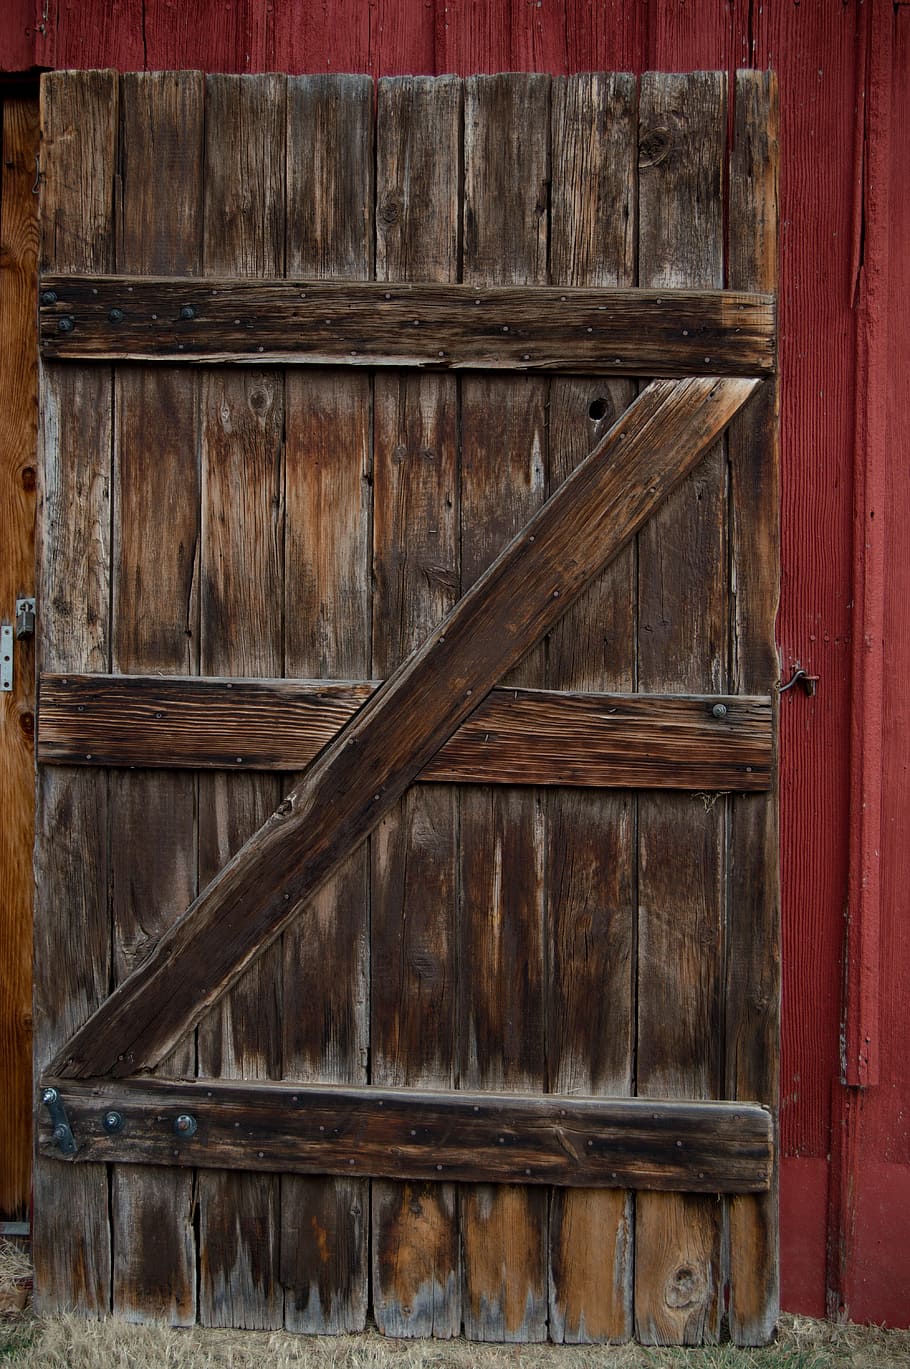 Rustic, Barn Door, Wood, barn, wooden, rural, farm, vintage, old, weathered